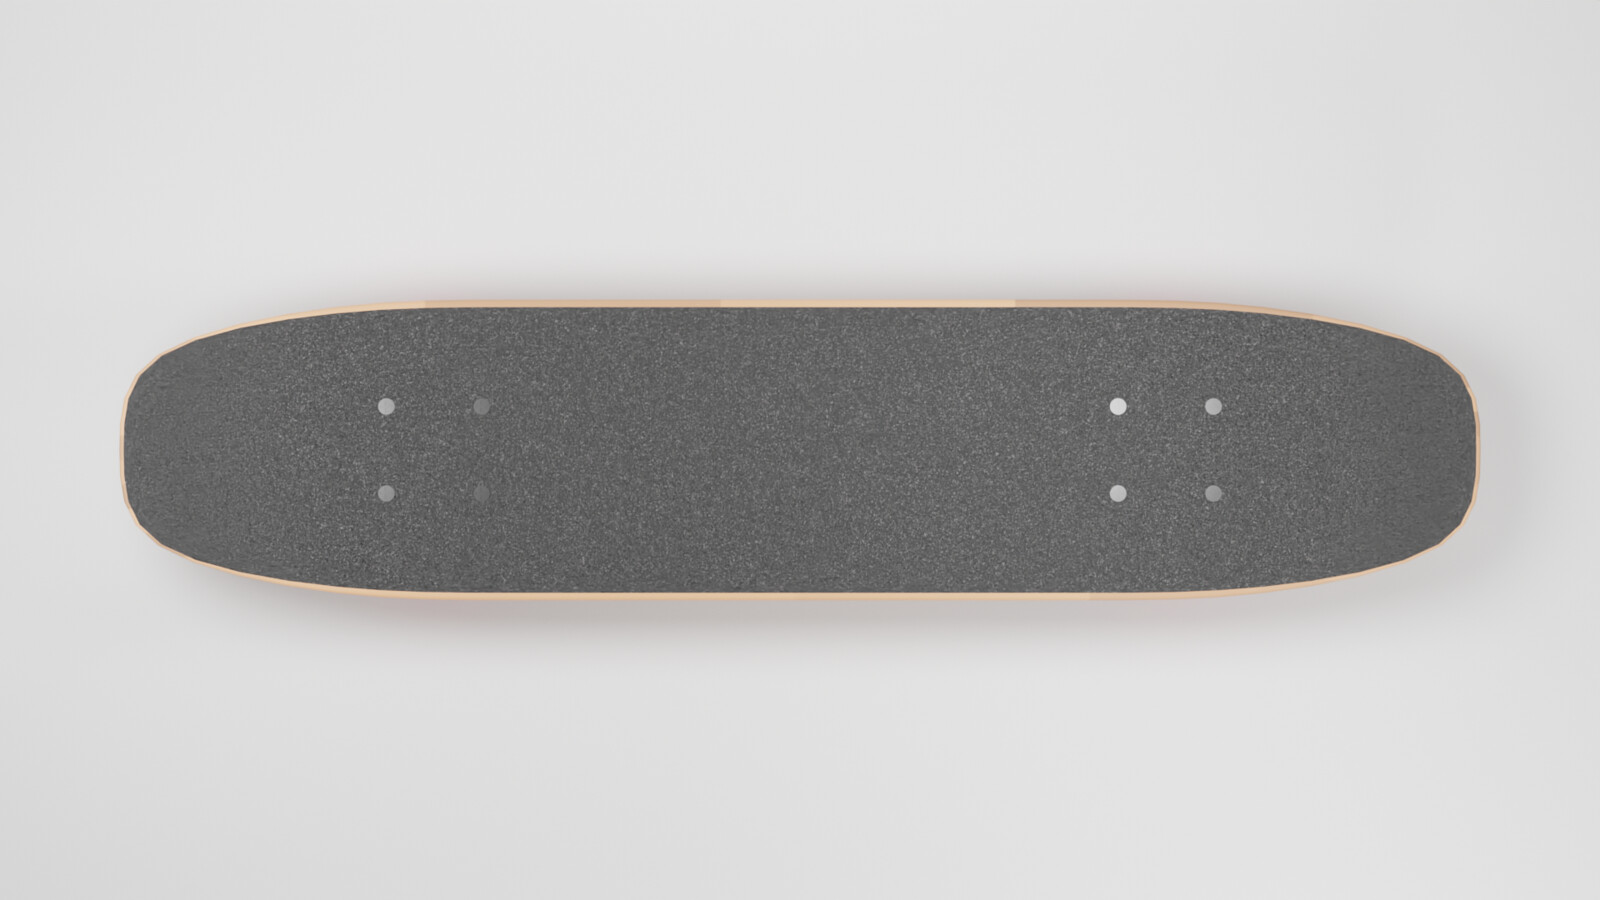 Wooden Skateboard render 6